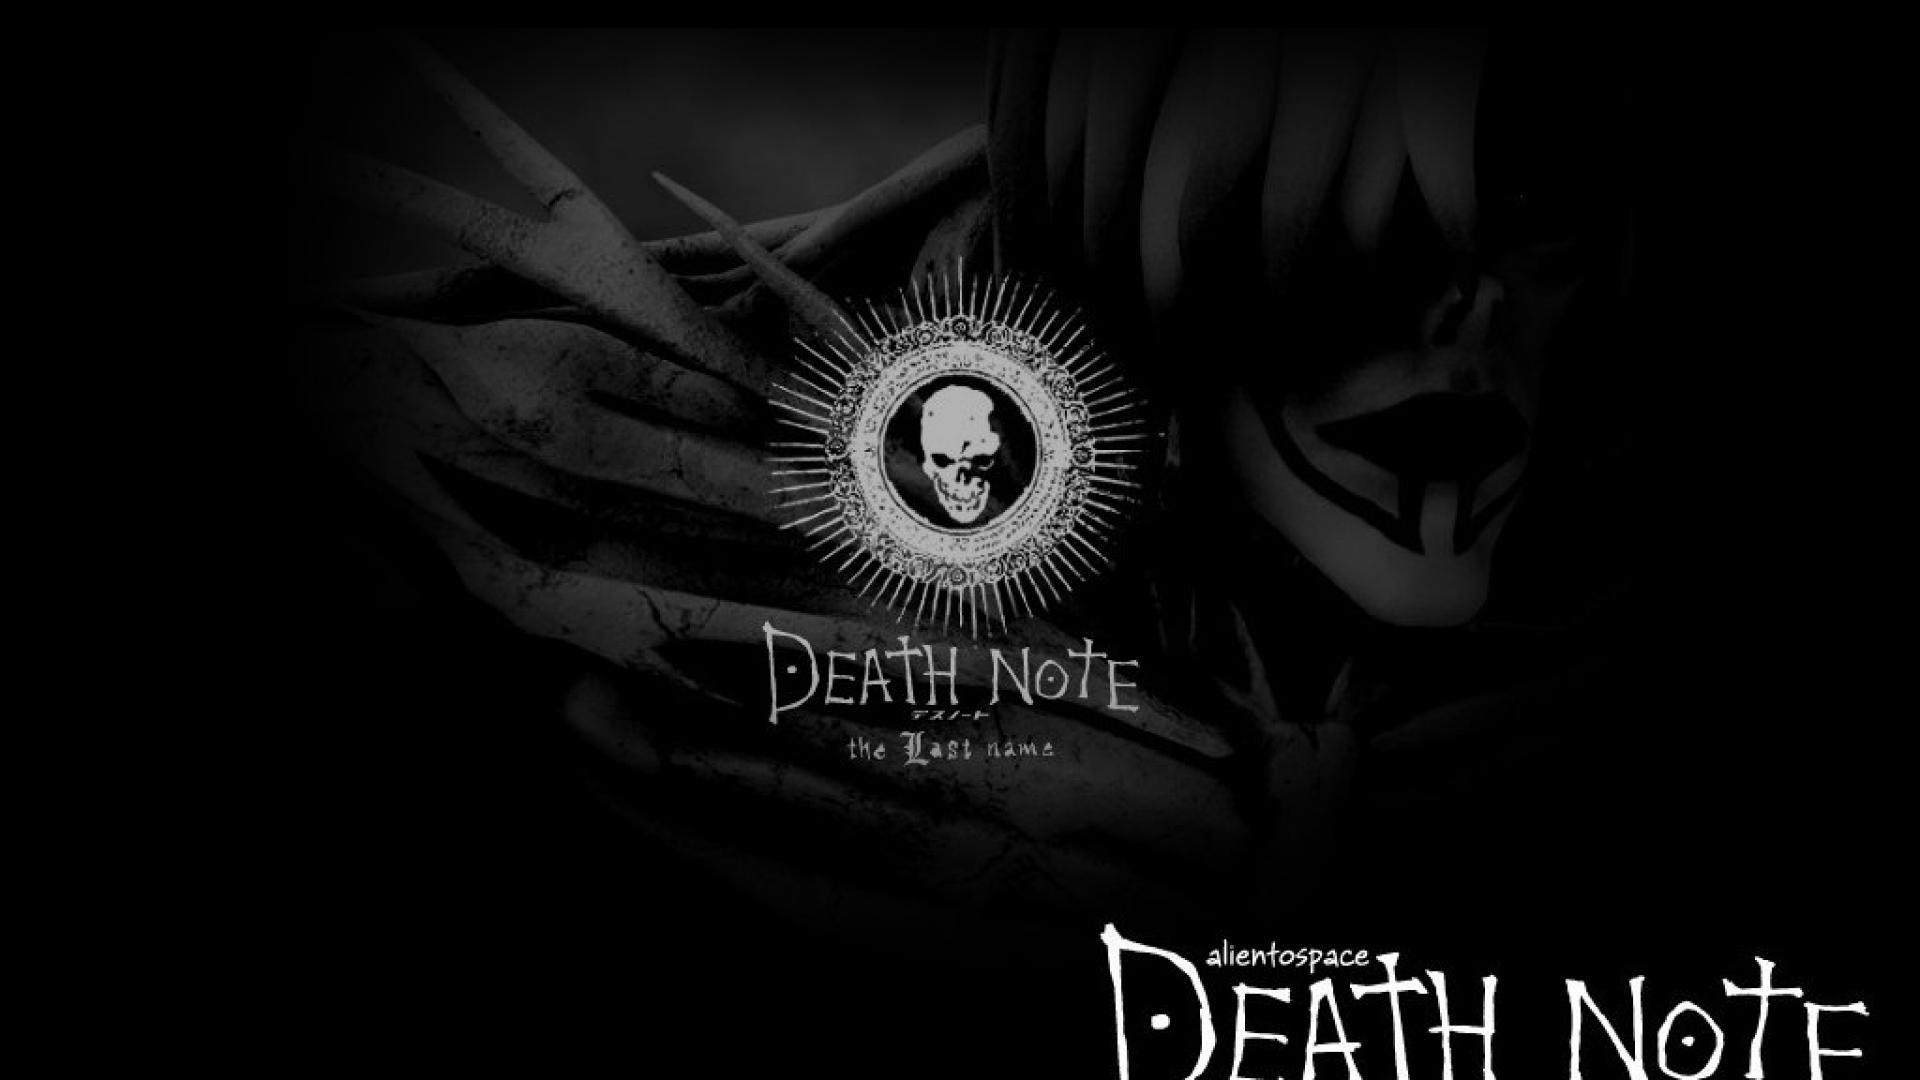 1920x1080 Death note logo hình nền đầu lâu.  1920x1080